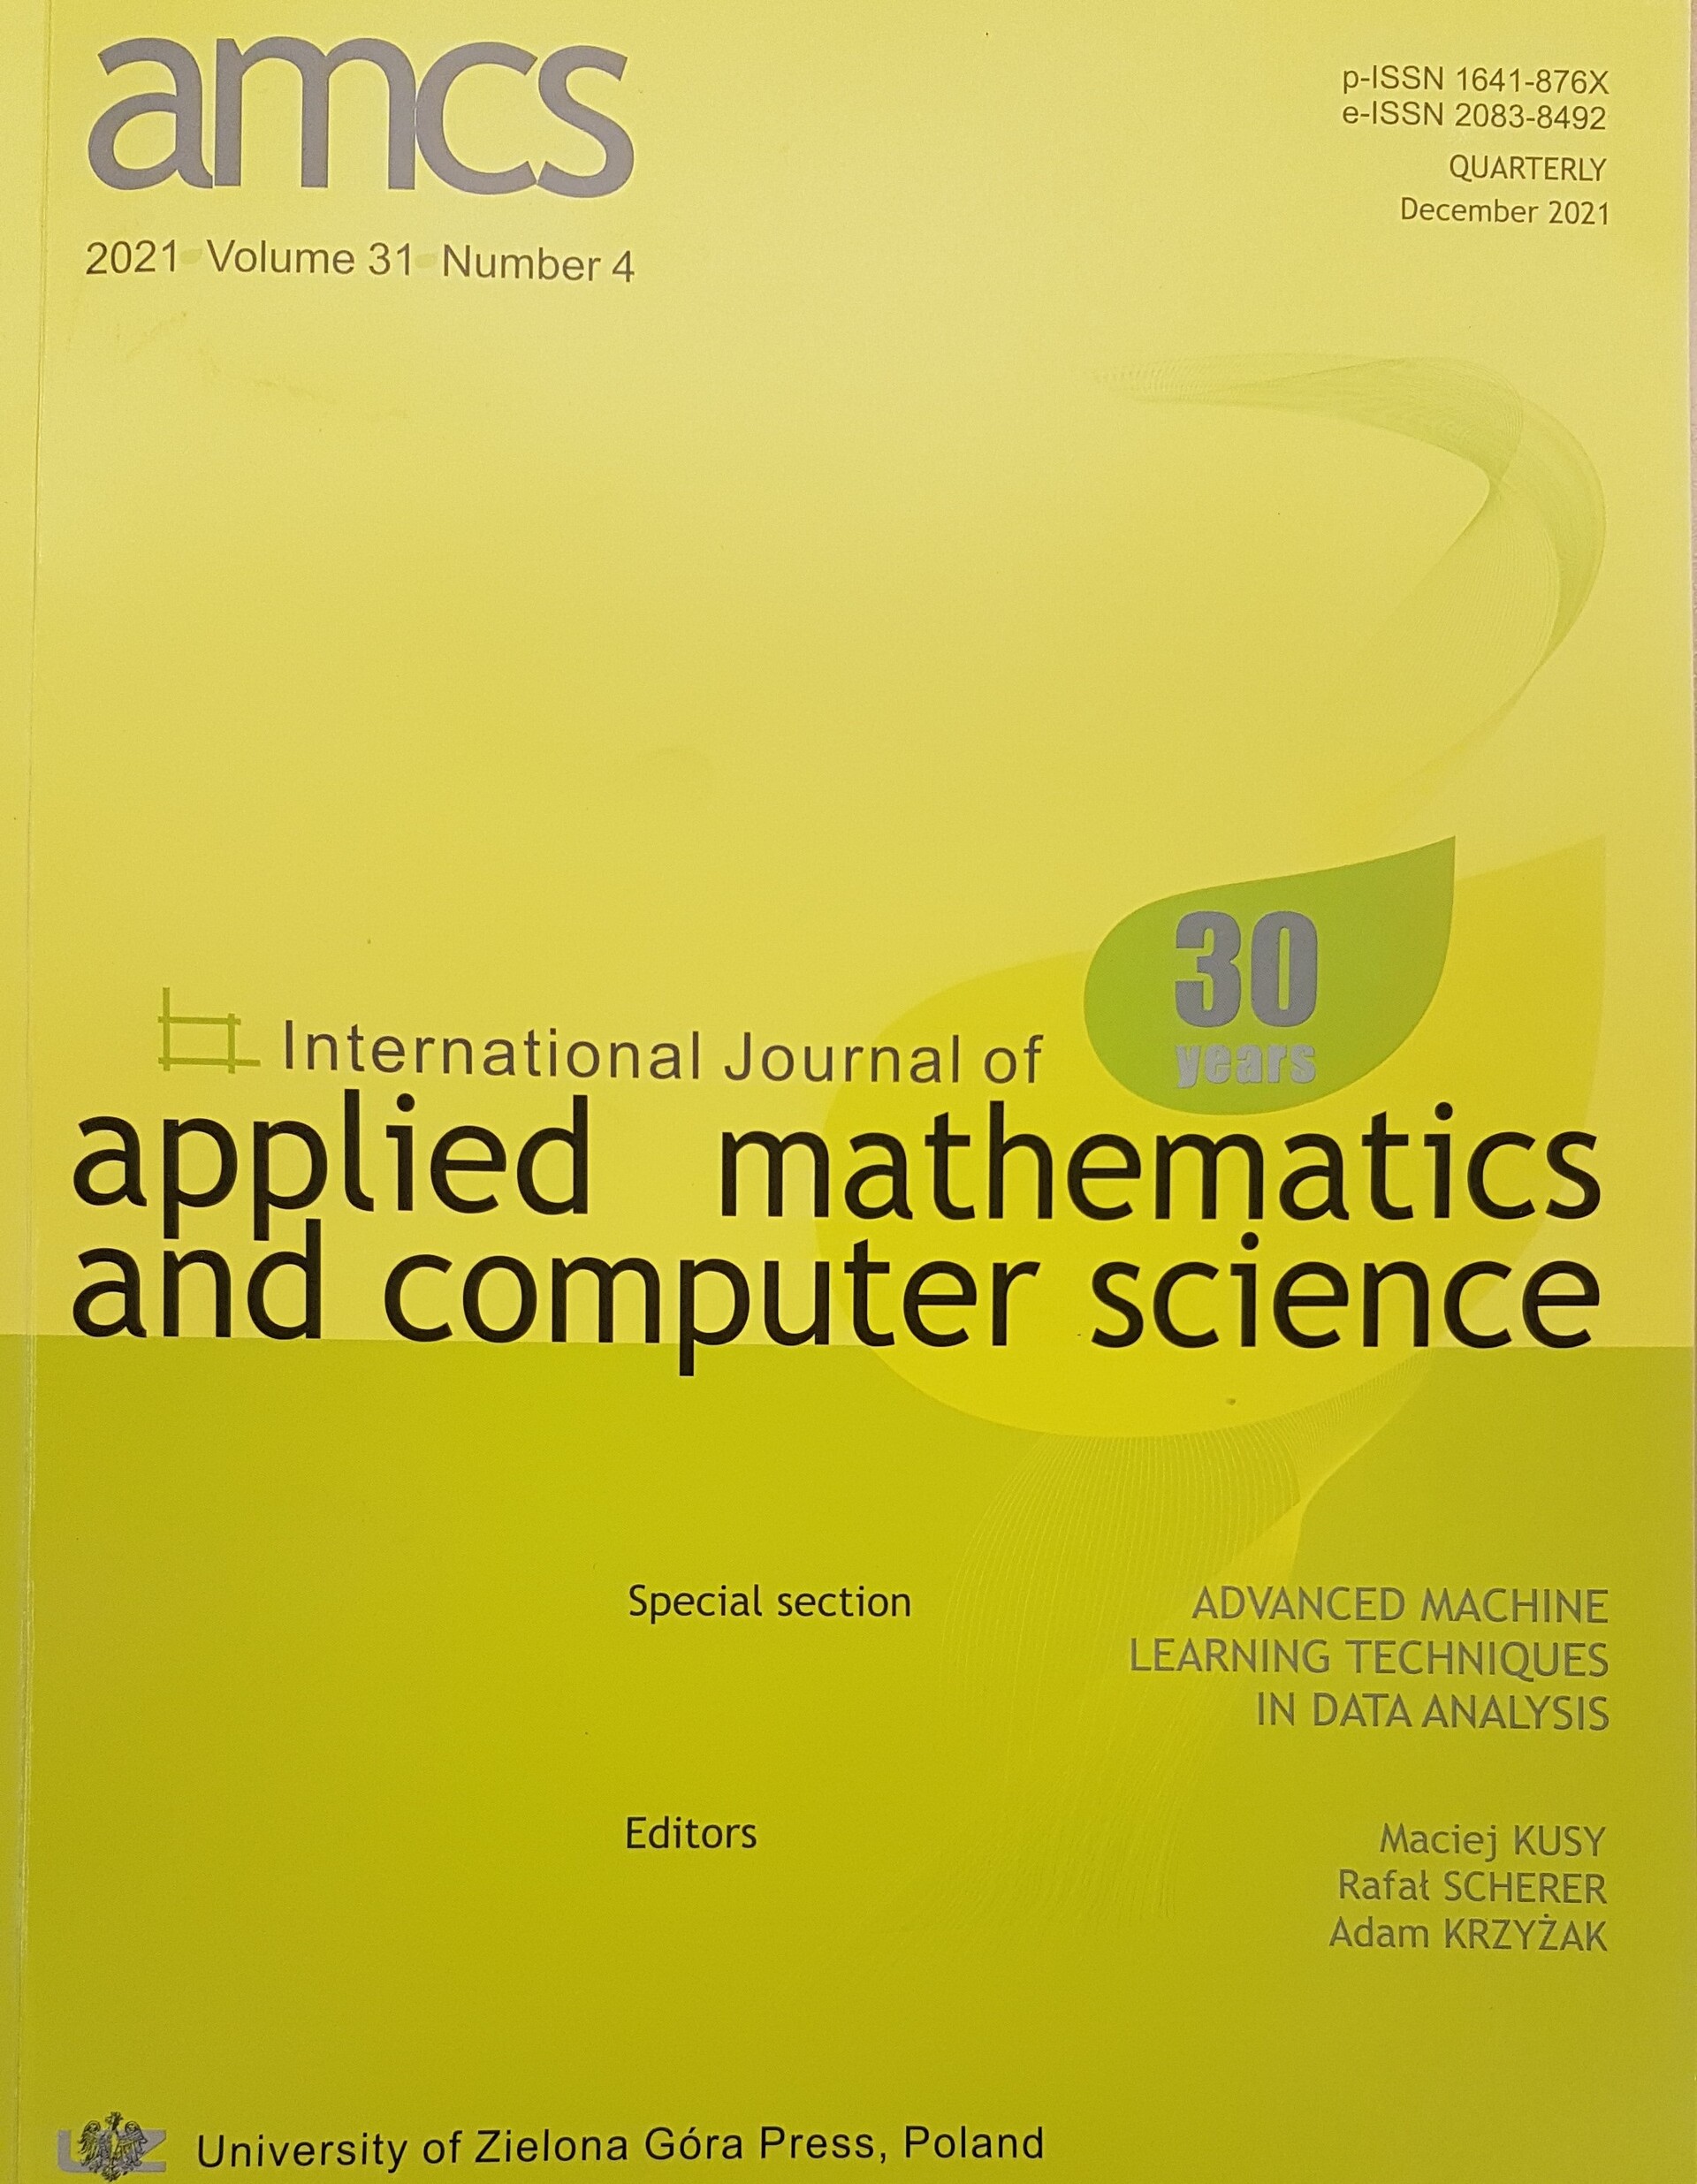 1international_journal_of_applied_mathematics_and_computer_science-1.jpg